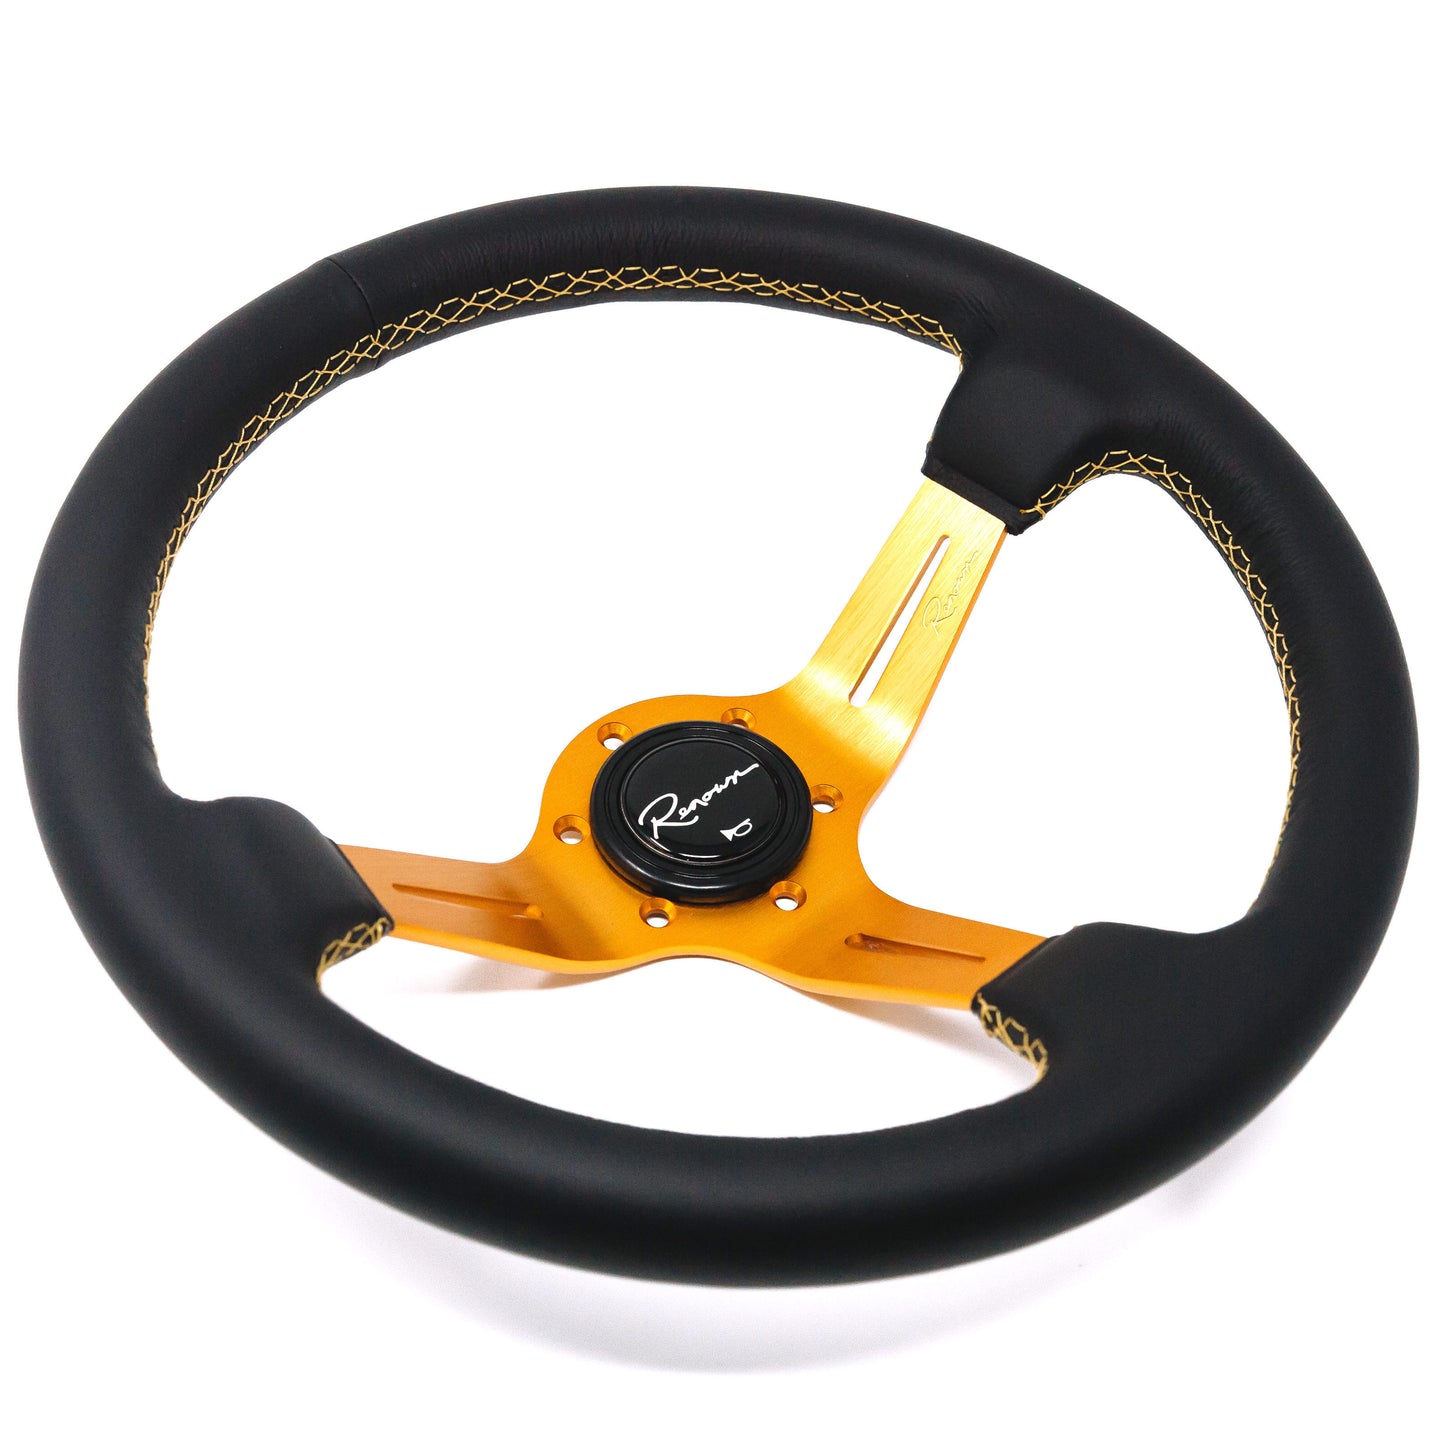 Renown Chicane Gold Steering Wheel